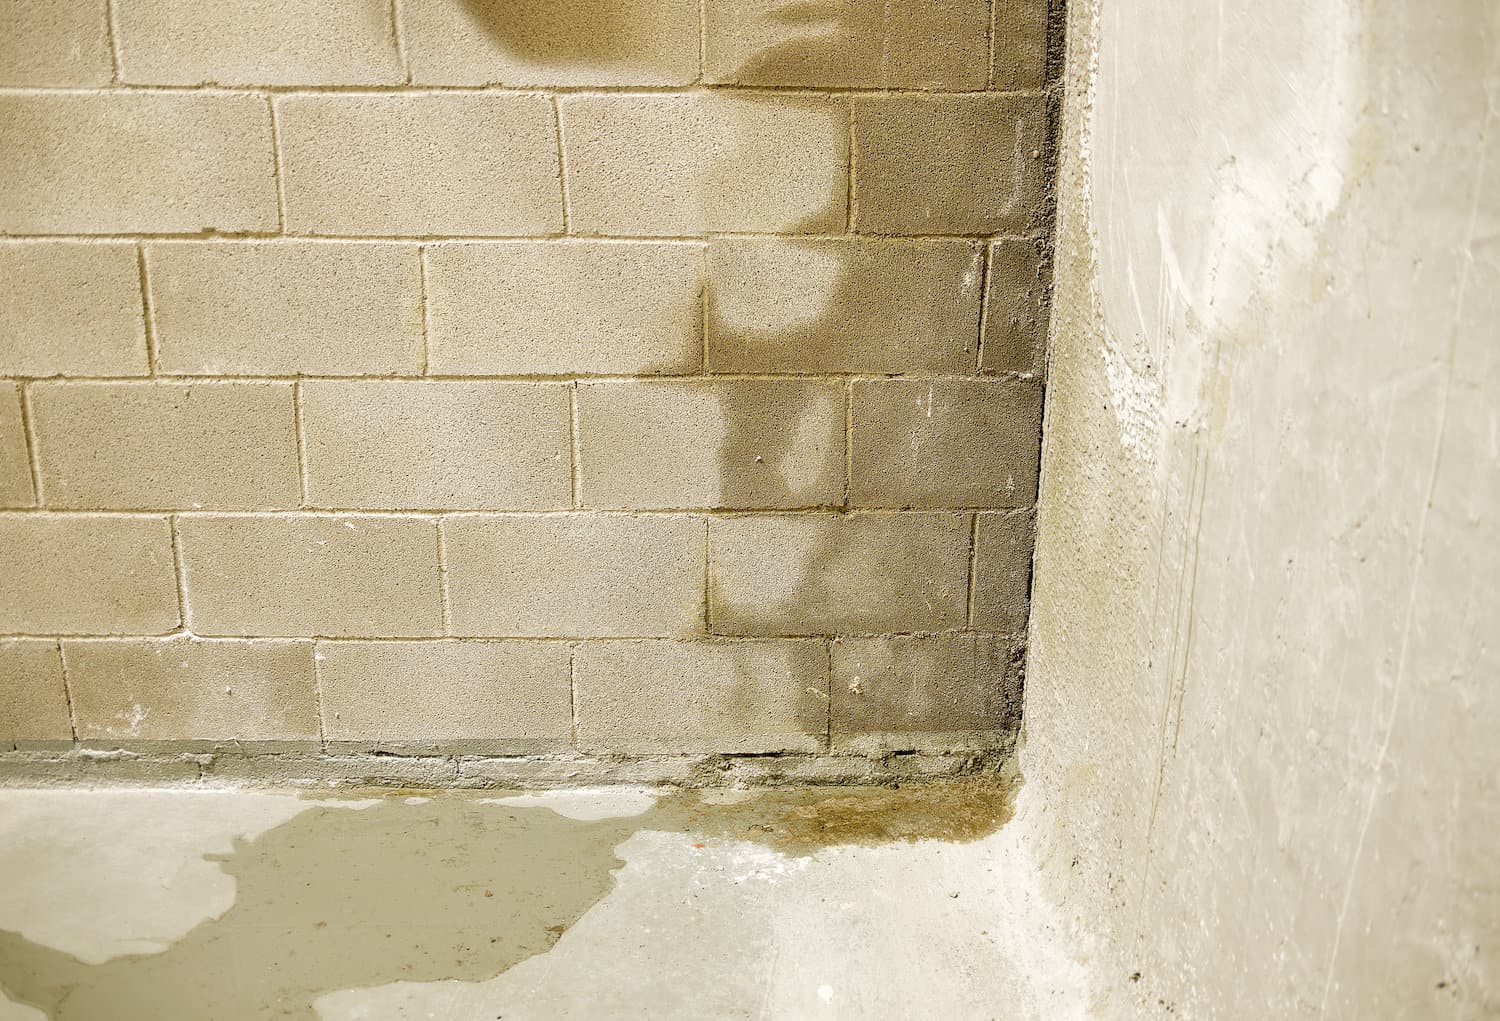 foundation issues damp basement